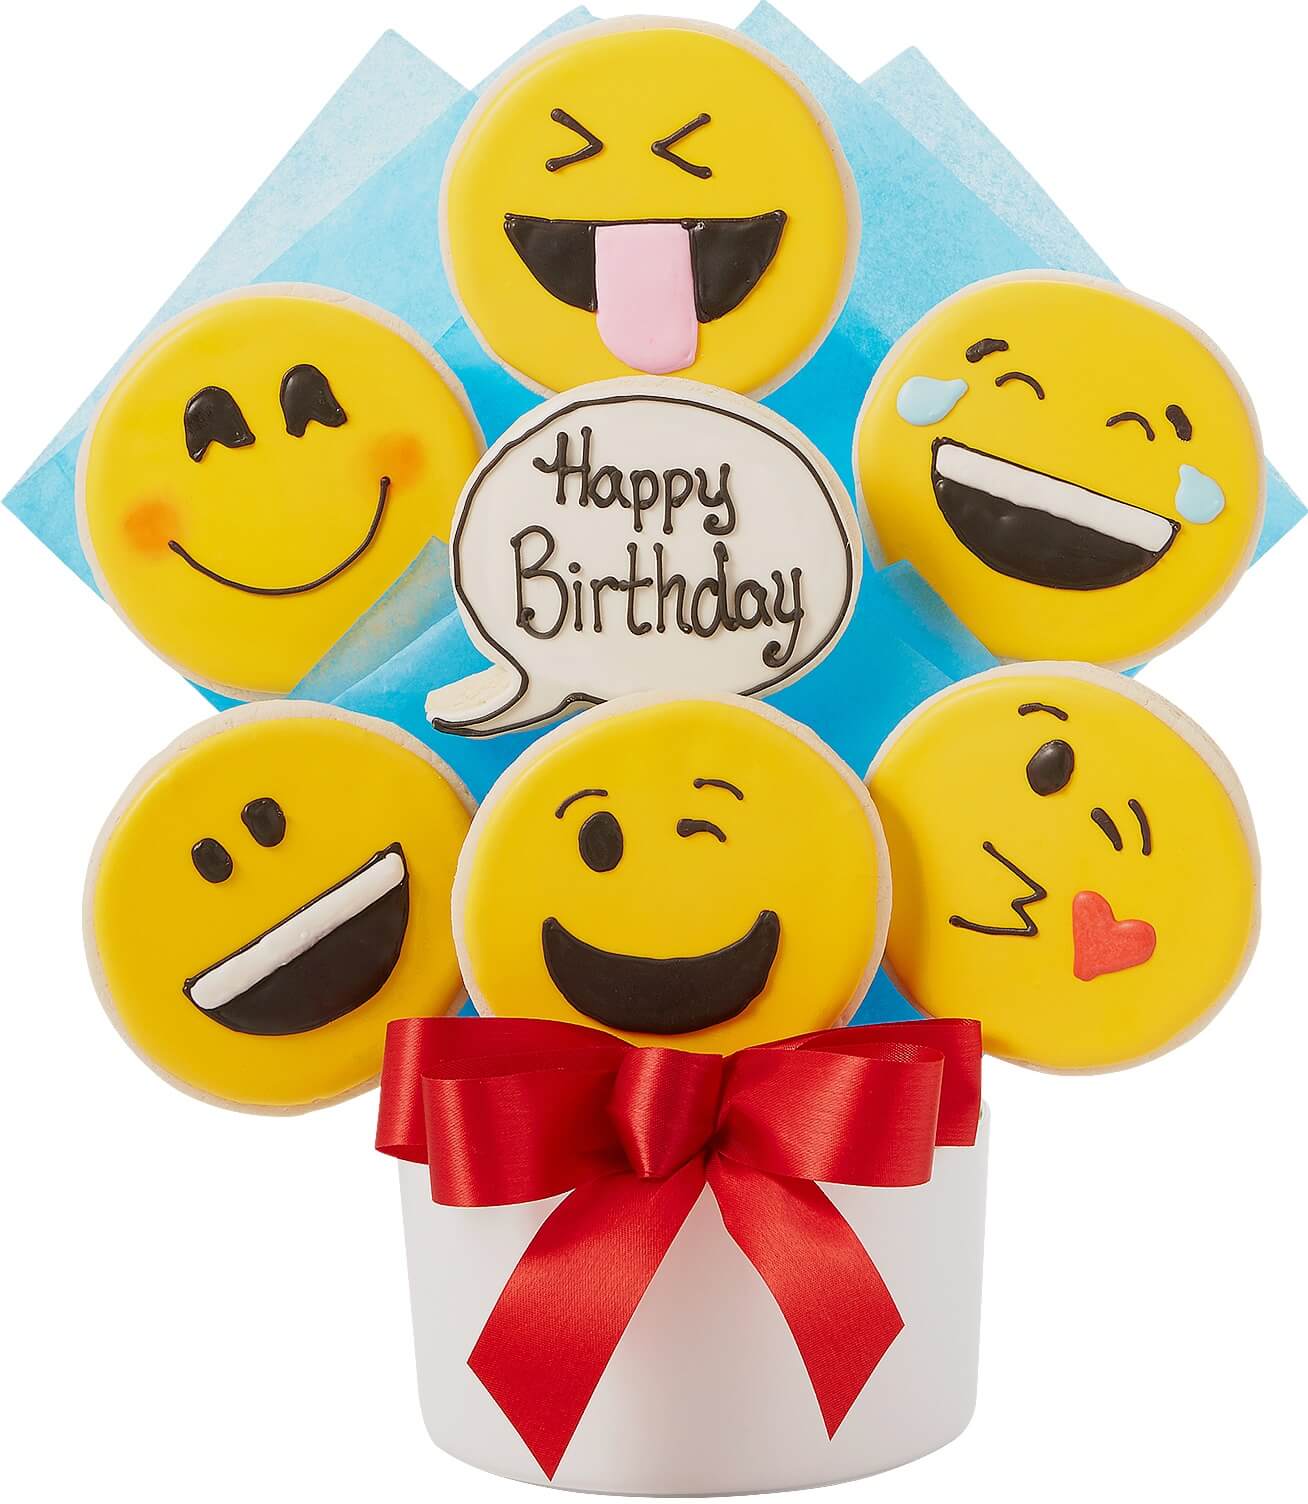 Happy Birthday Emoji Cutout Cookie Bouquet.